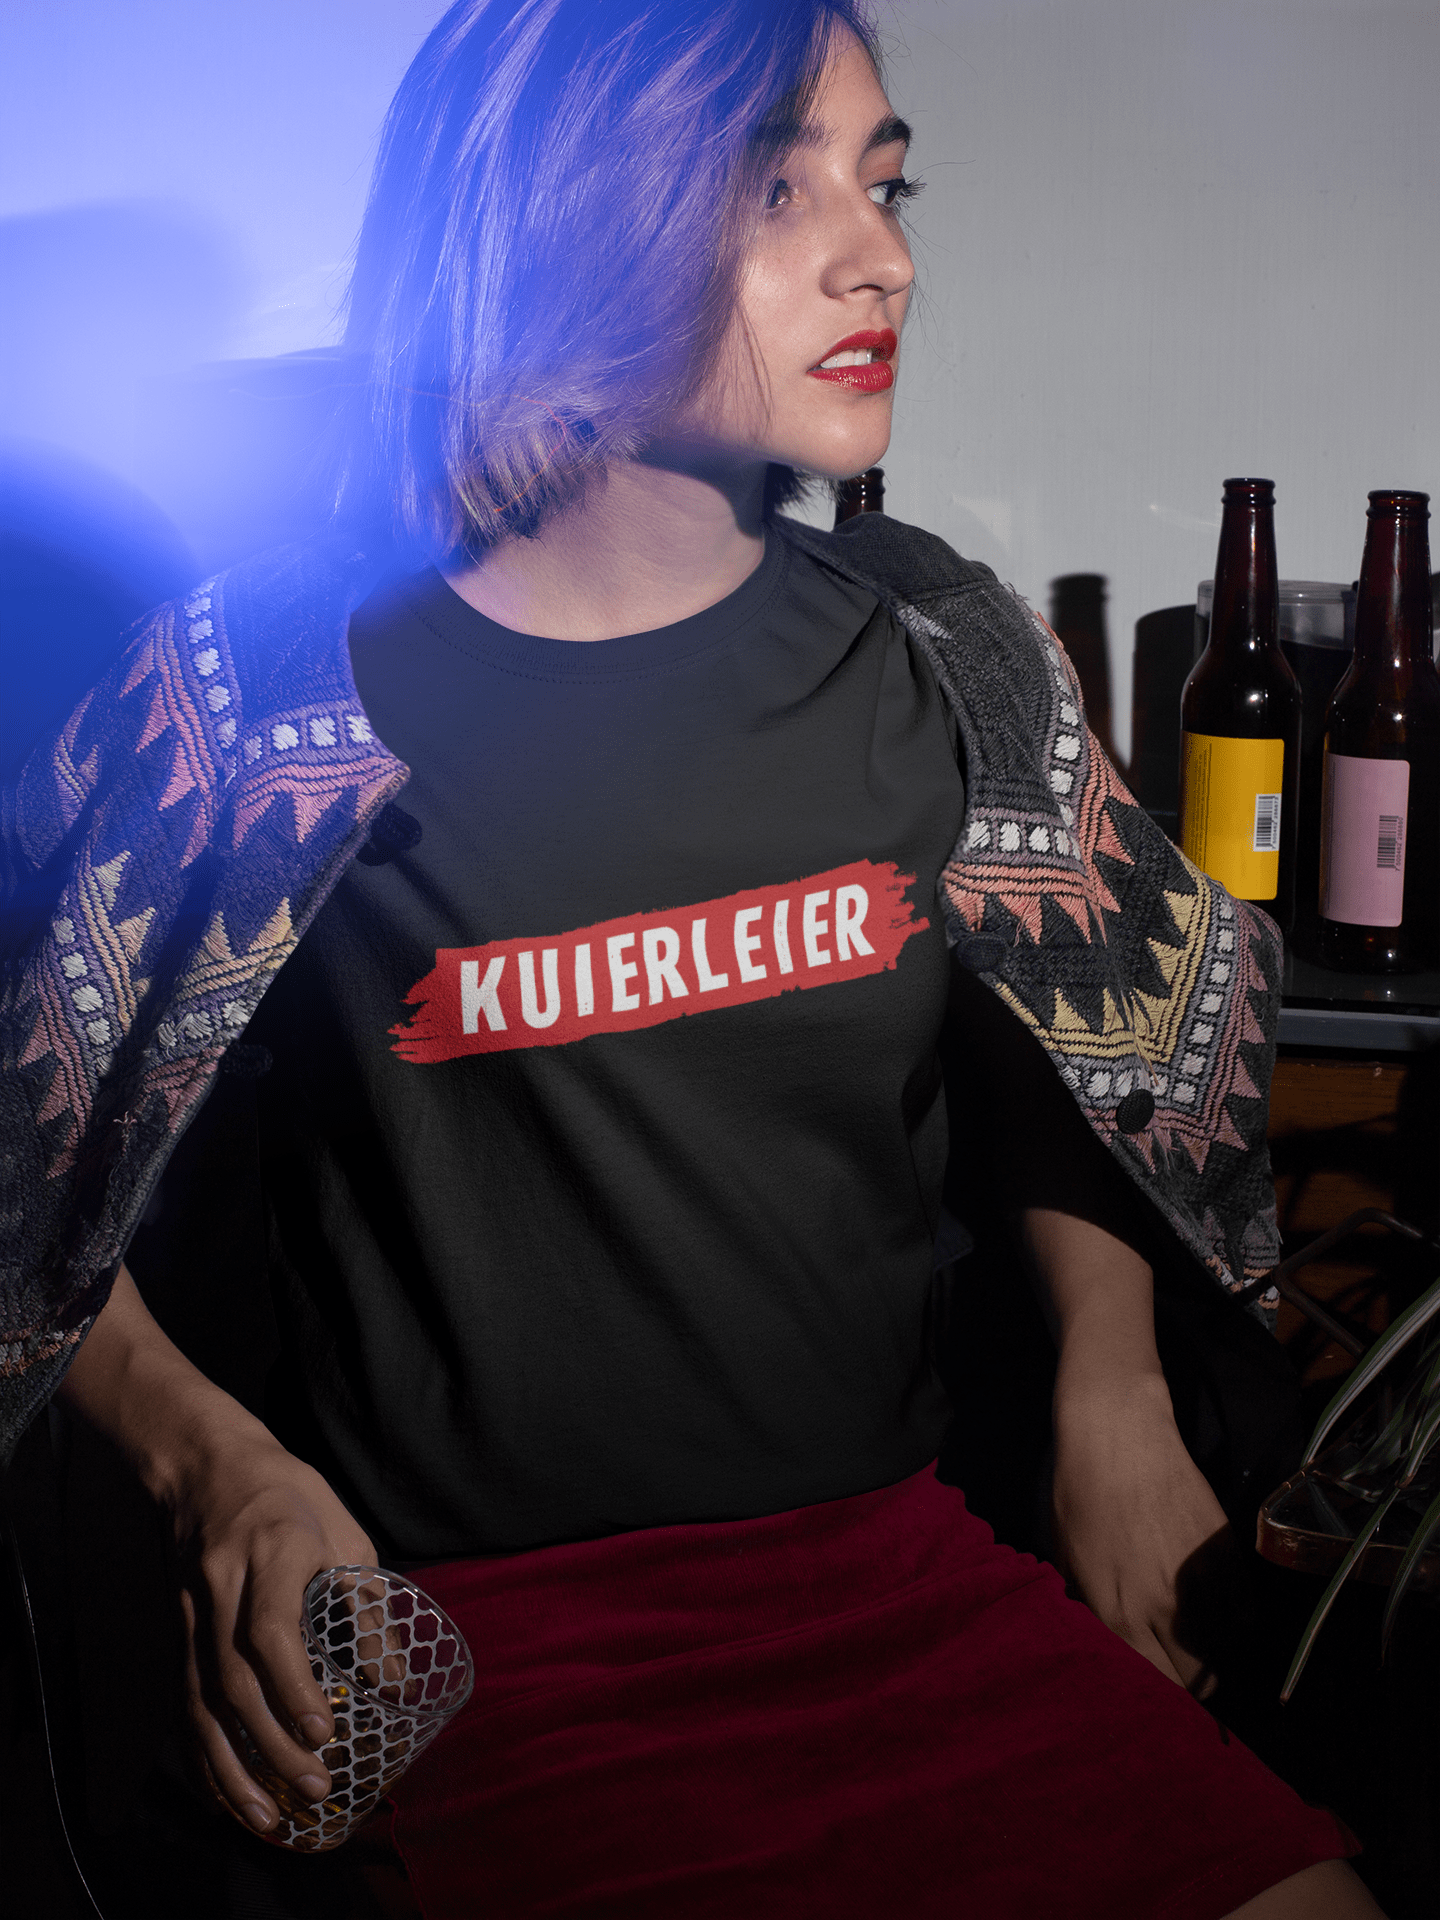 Idees Vol Vrees® "KUIERLEIER" Rooi/Wit Women's T-shirt